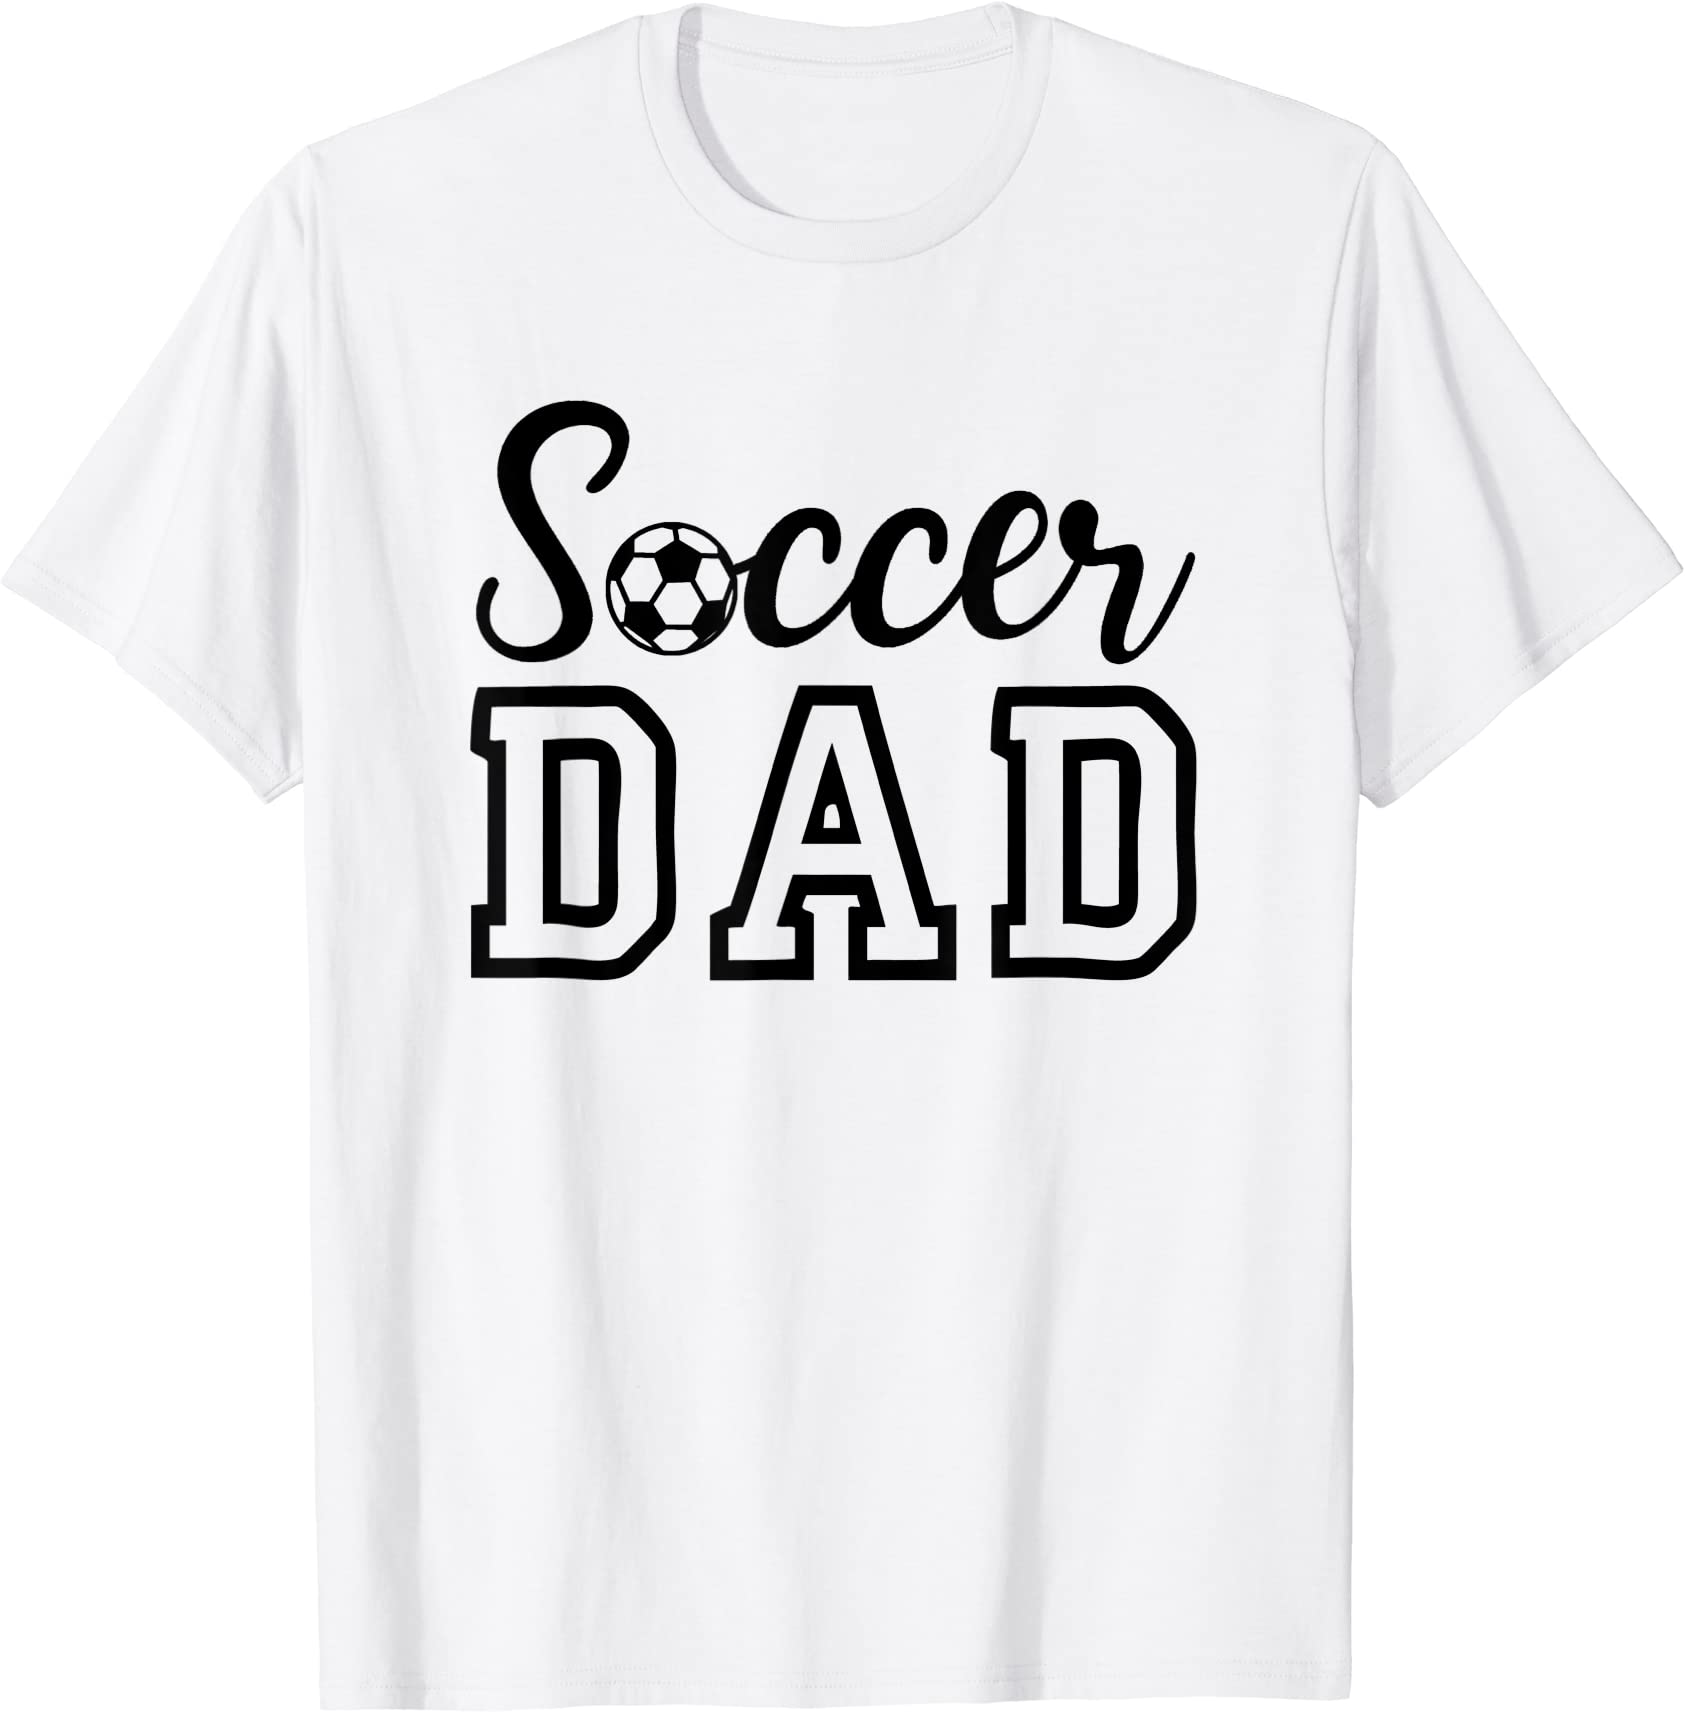 soccer dad t shirt men - Buy t-shirt designs